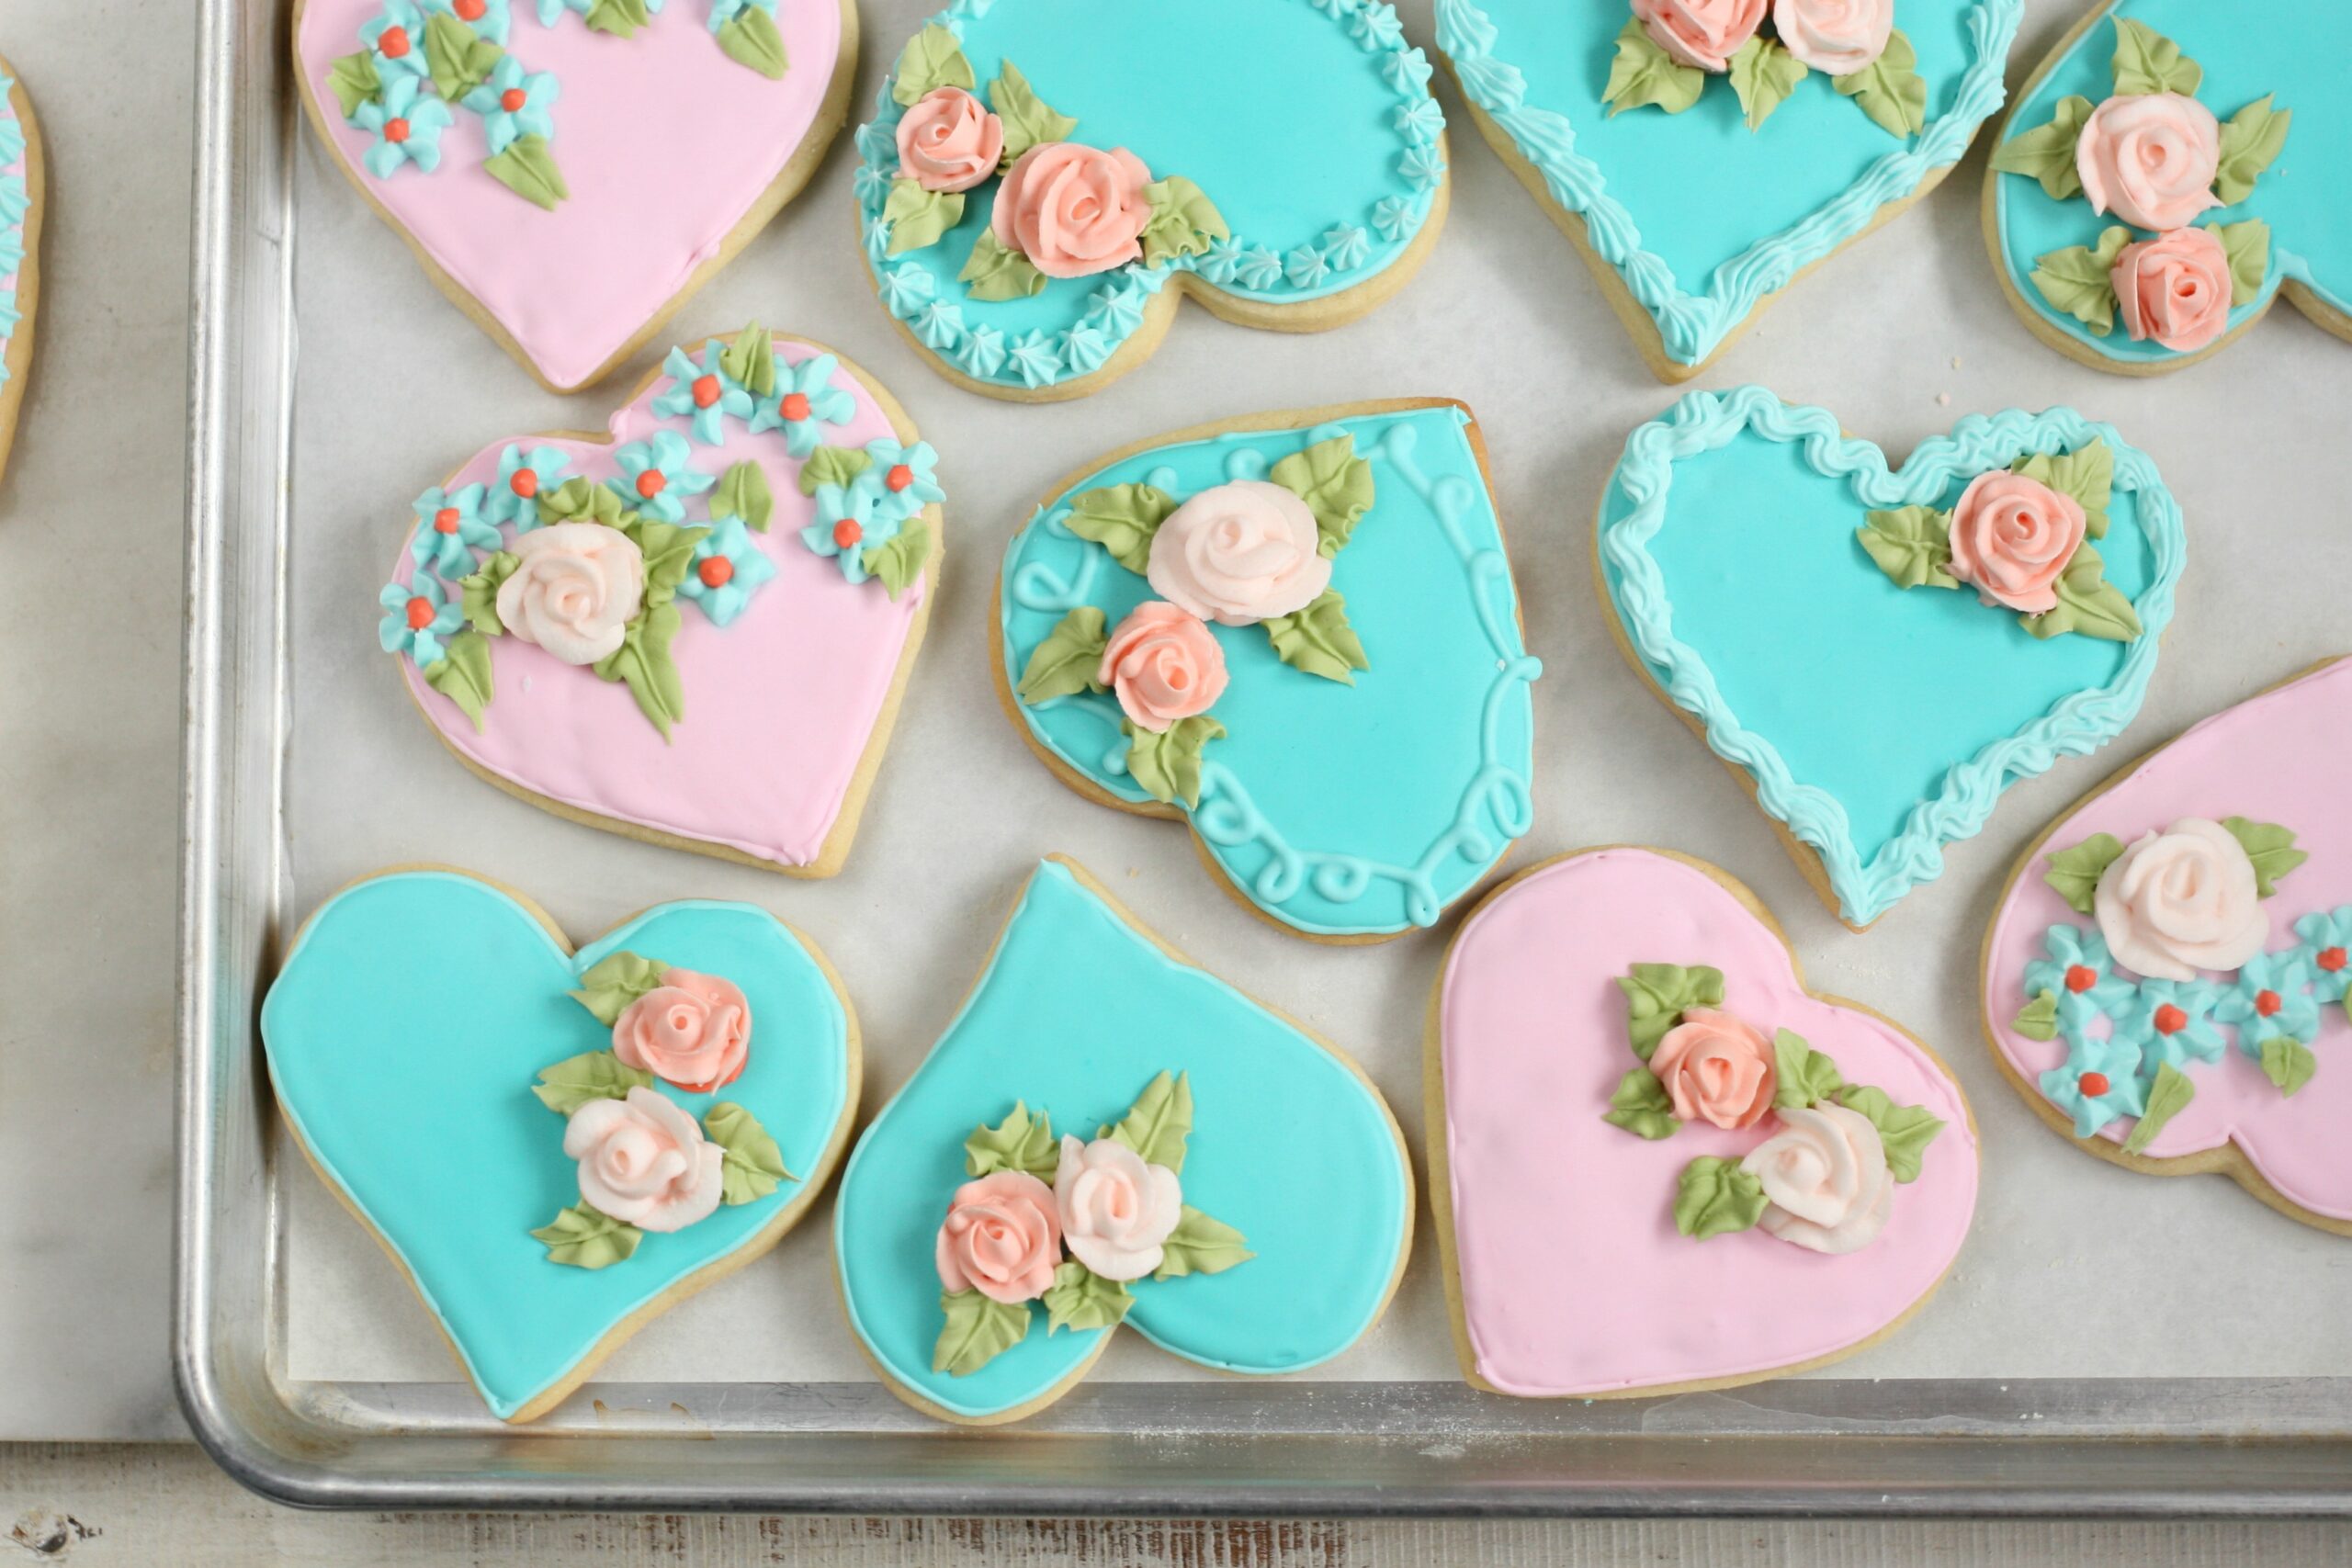 Heart shaped sugar cookies with handmade sugar roses.